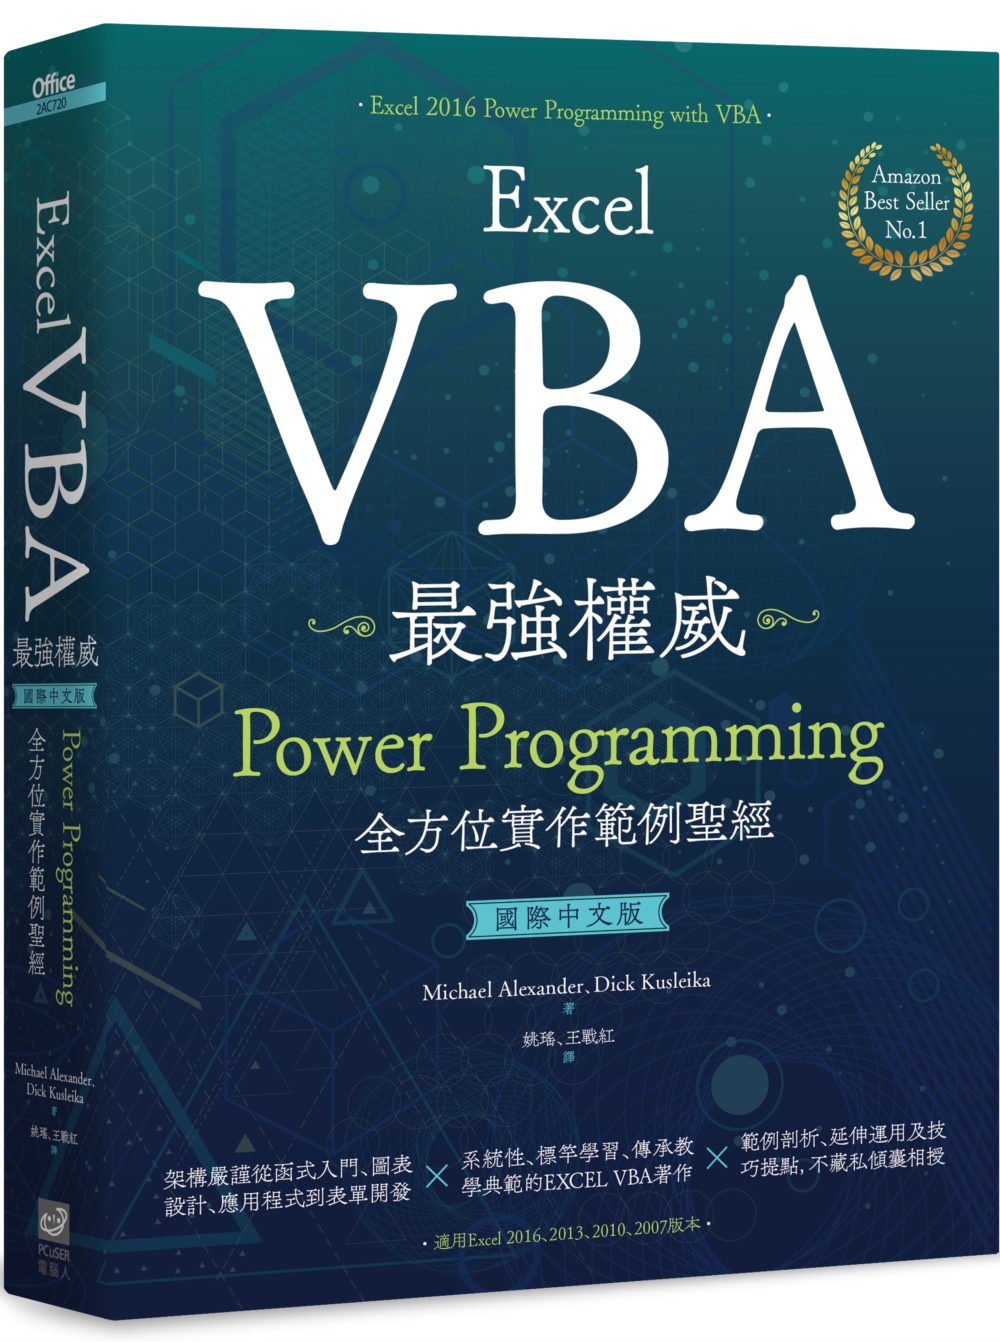 Excel VBA最強權威〈國際中文版〉：Power Pro...